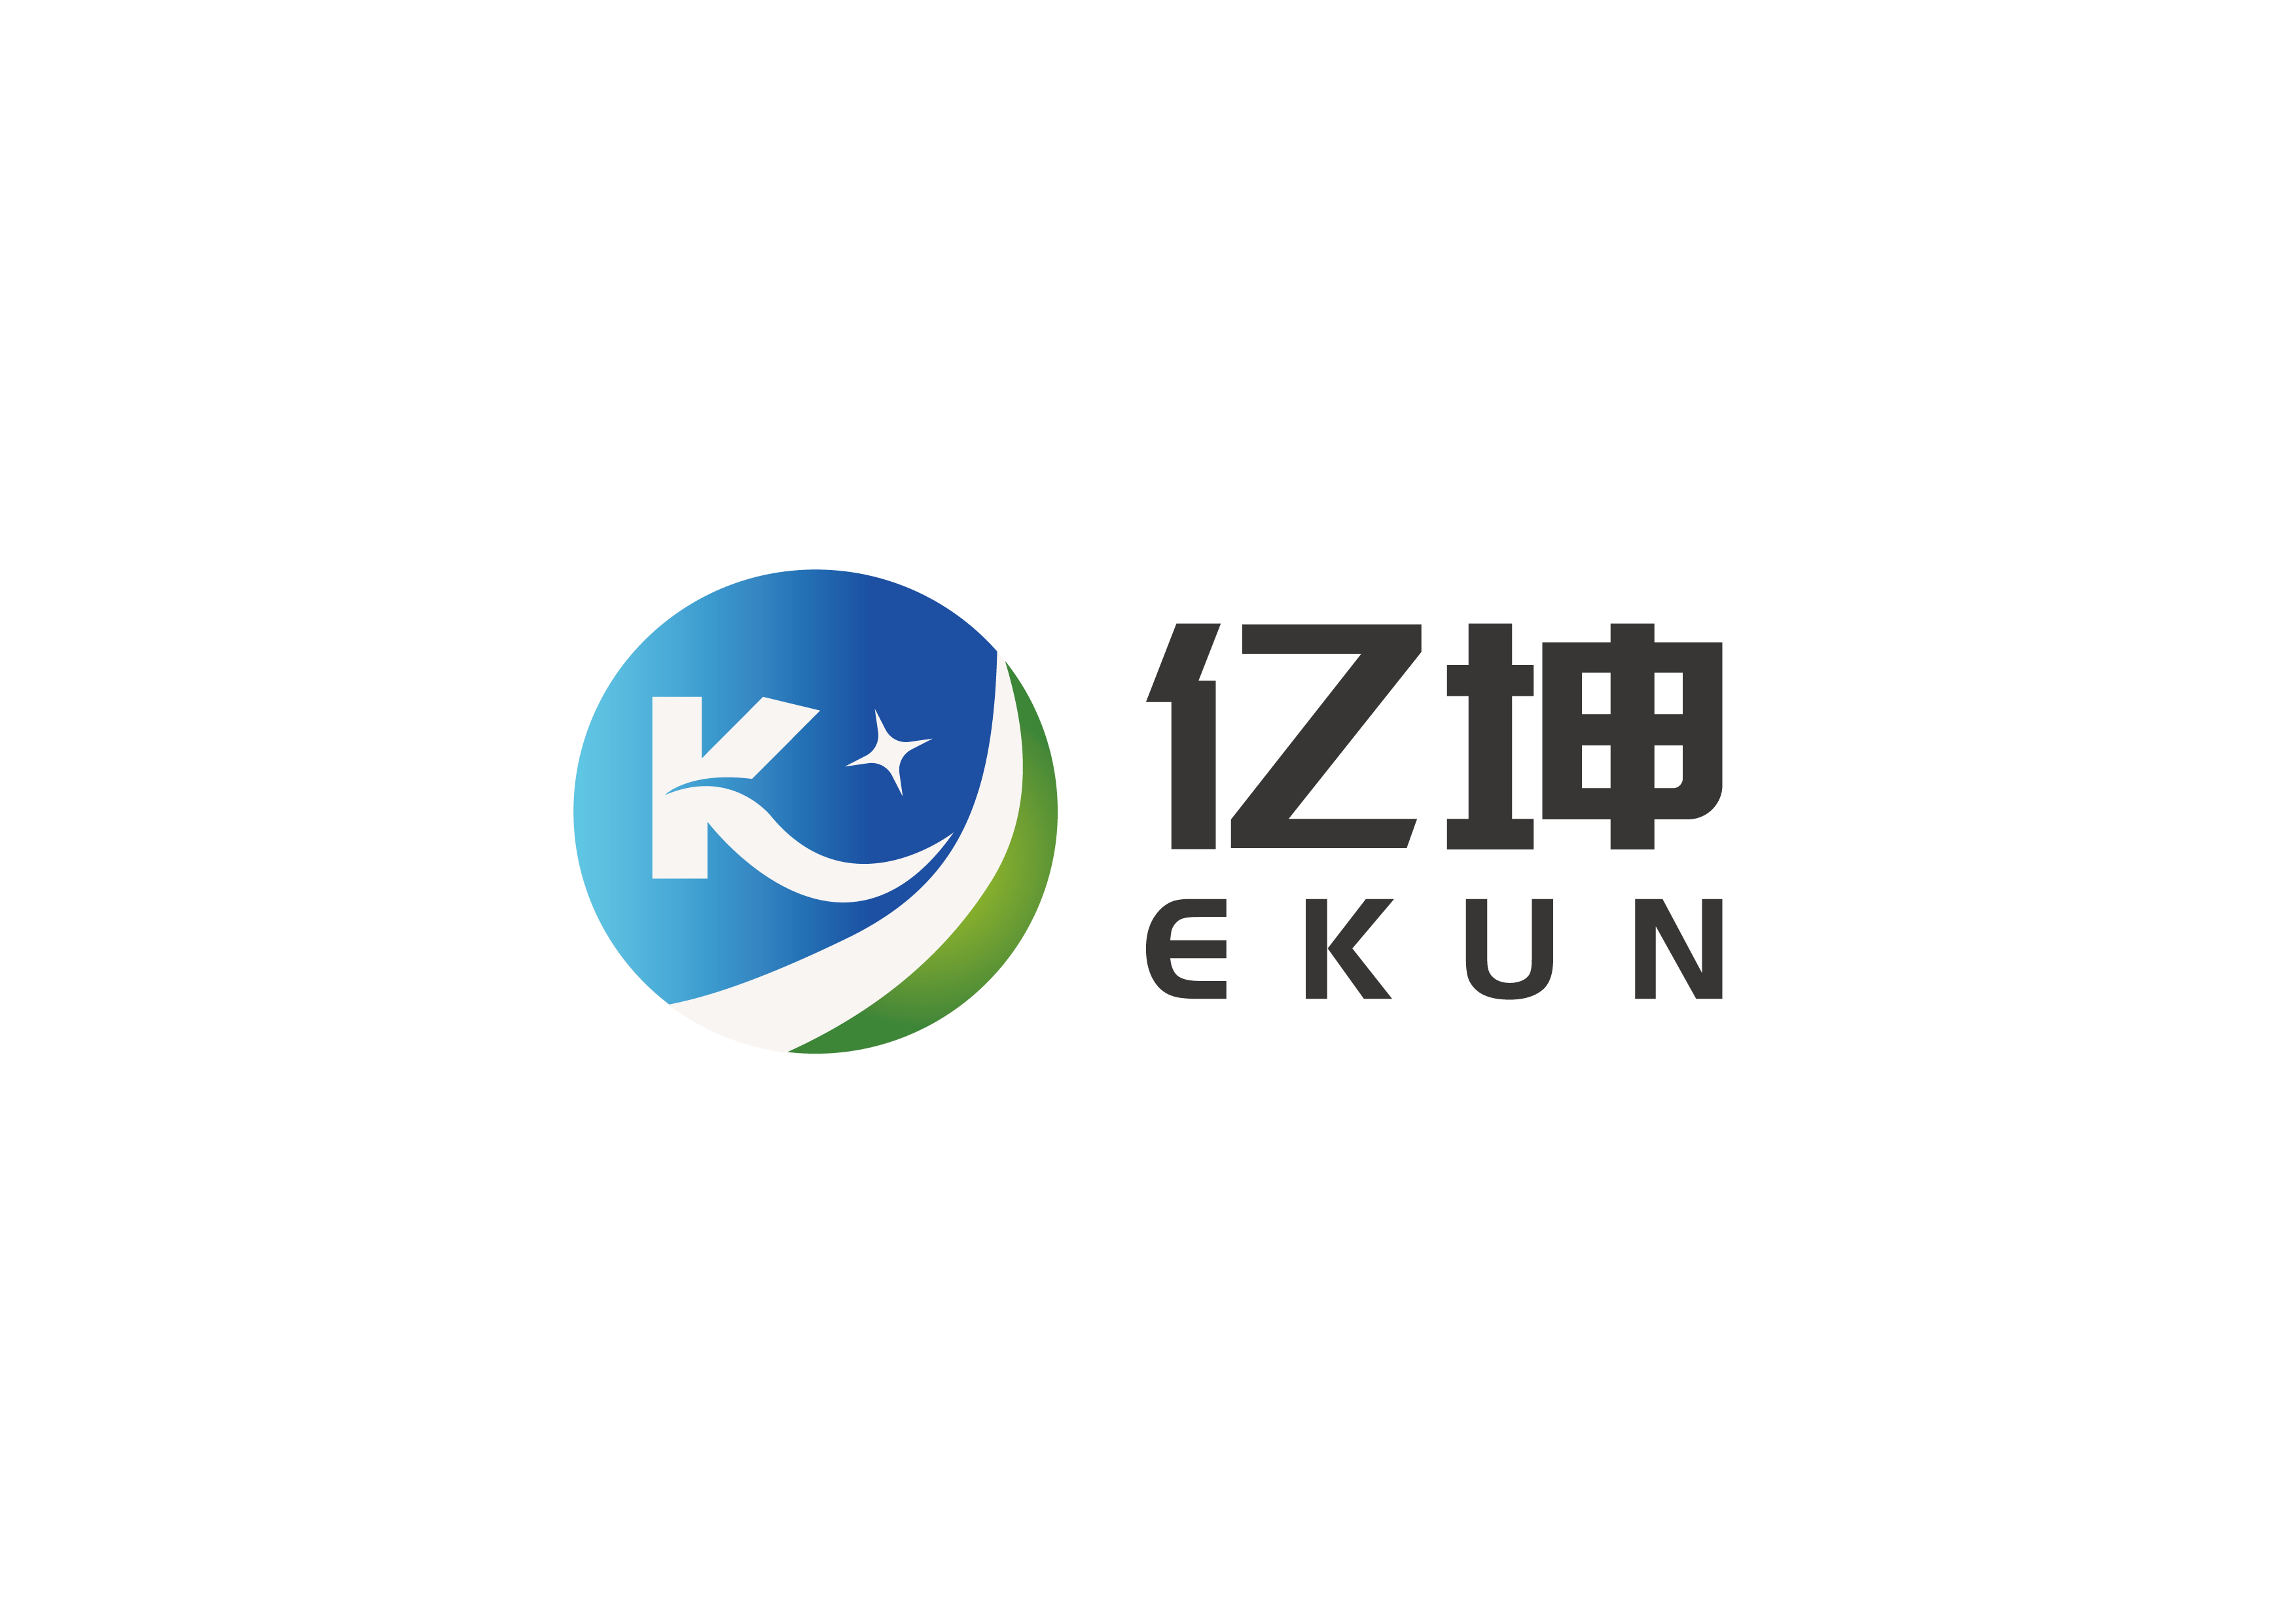 Tianjin EKun International Trade Co., Ltd